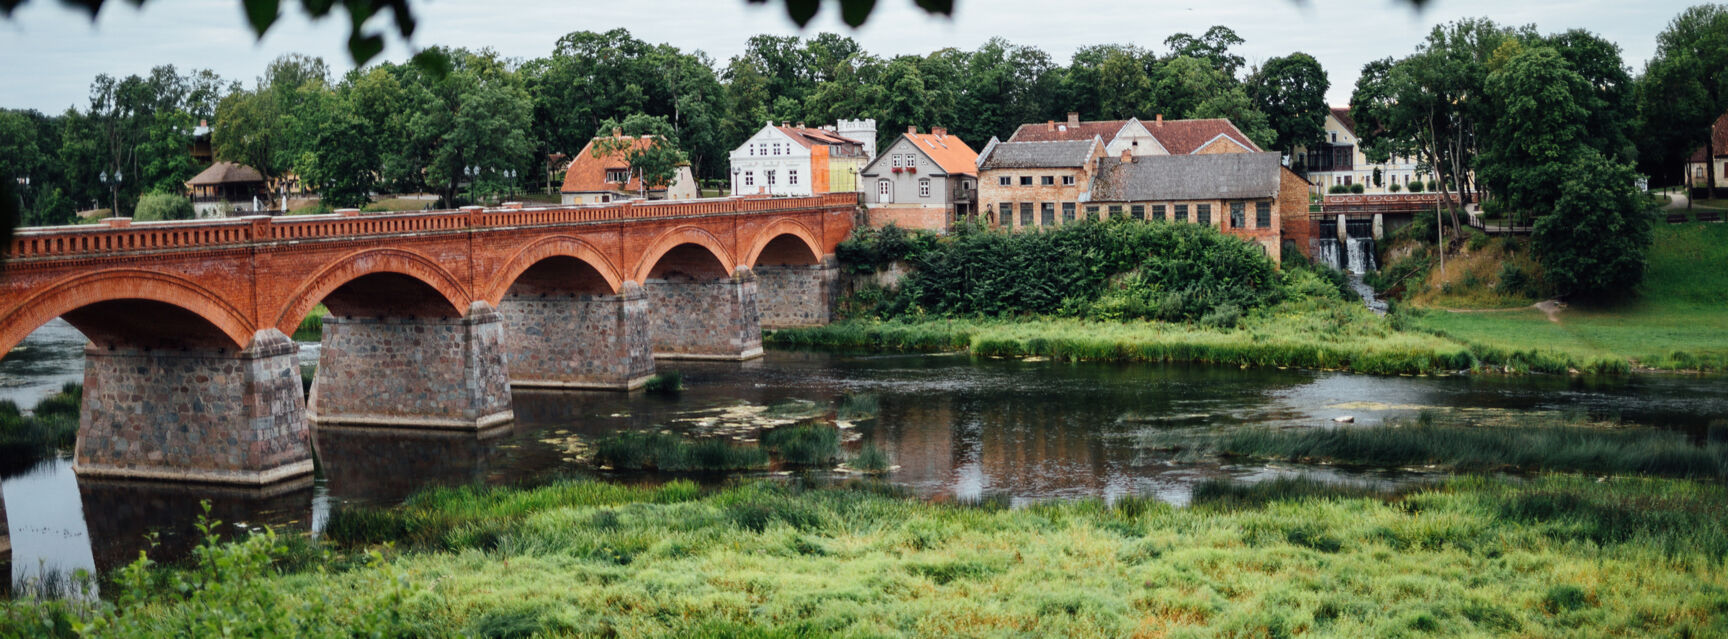 Kuldiga bridge